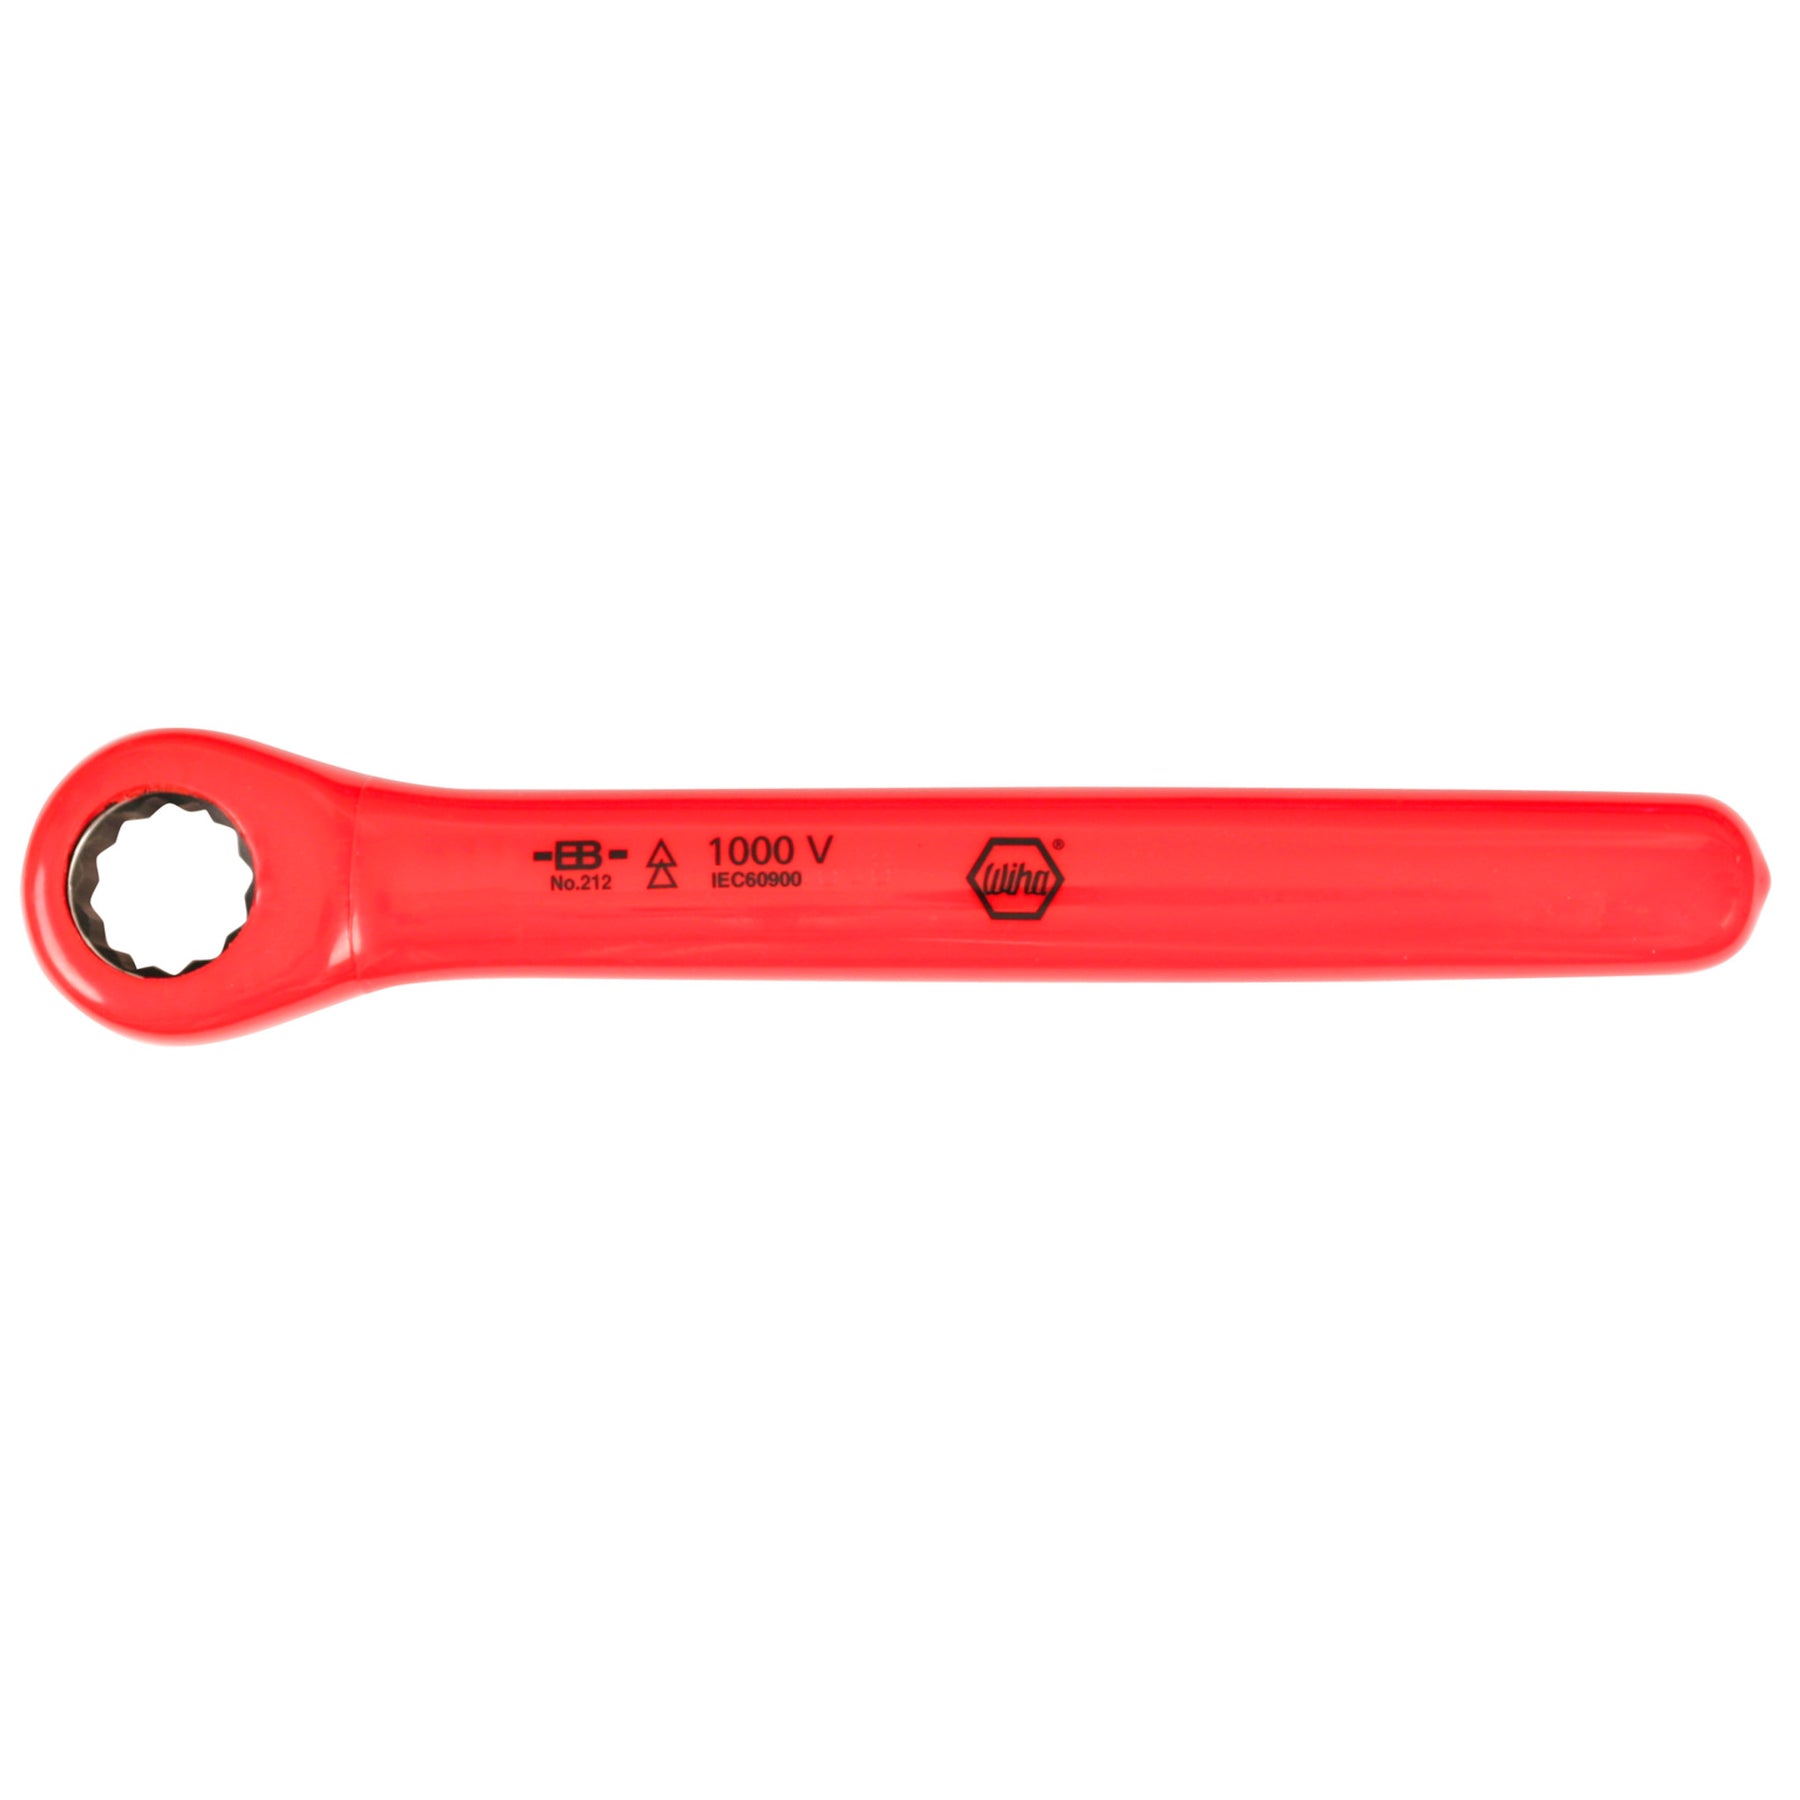 Wiha 21321 Insulated Ratchet Wrench 5/16"